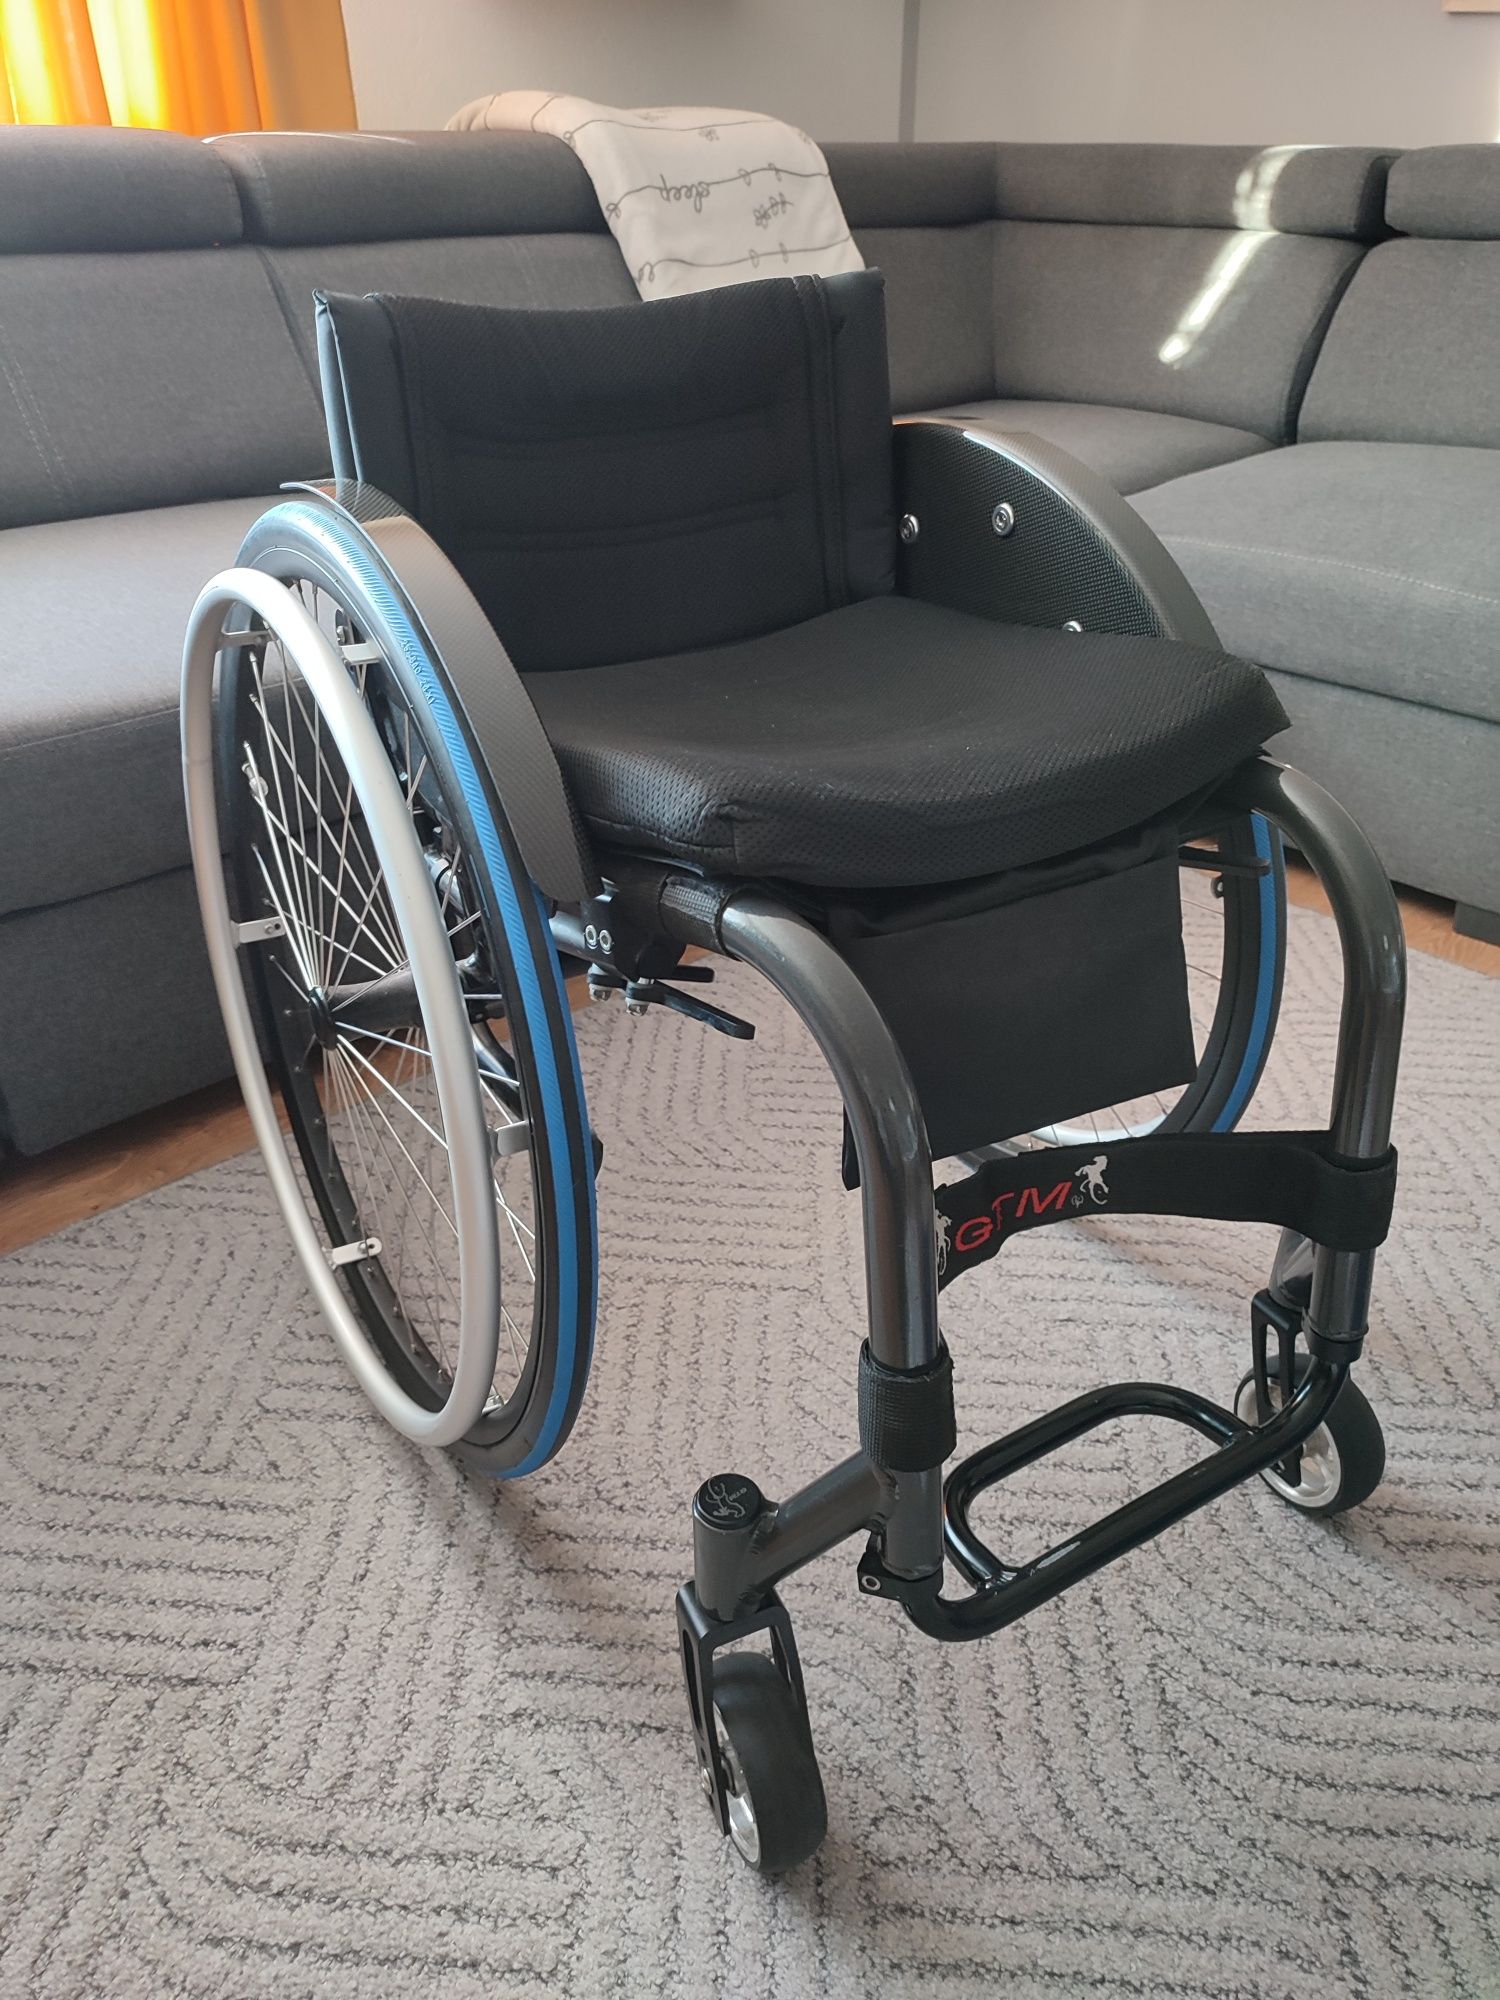 Wózek inwalidzki GTM Mustang